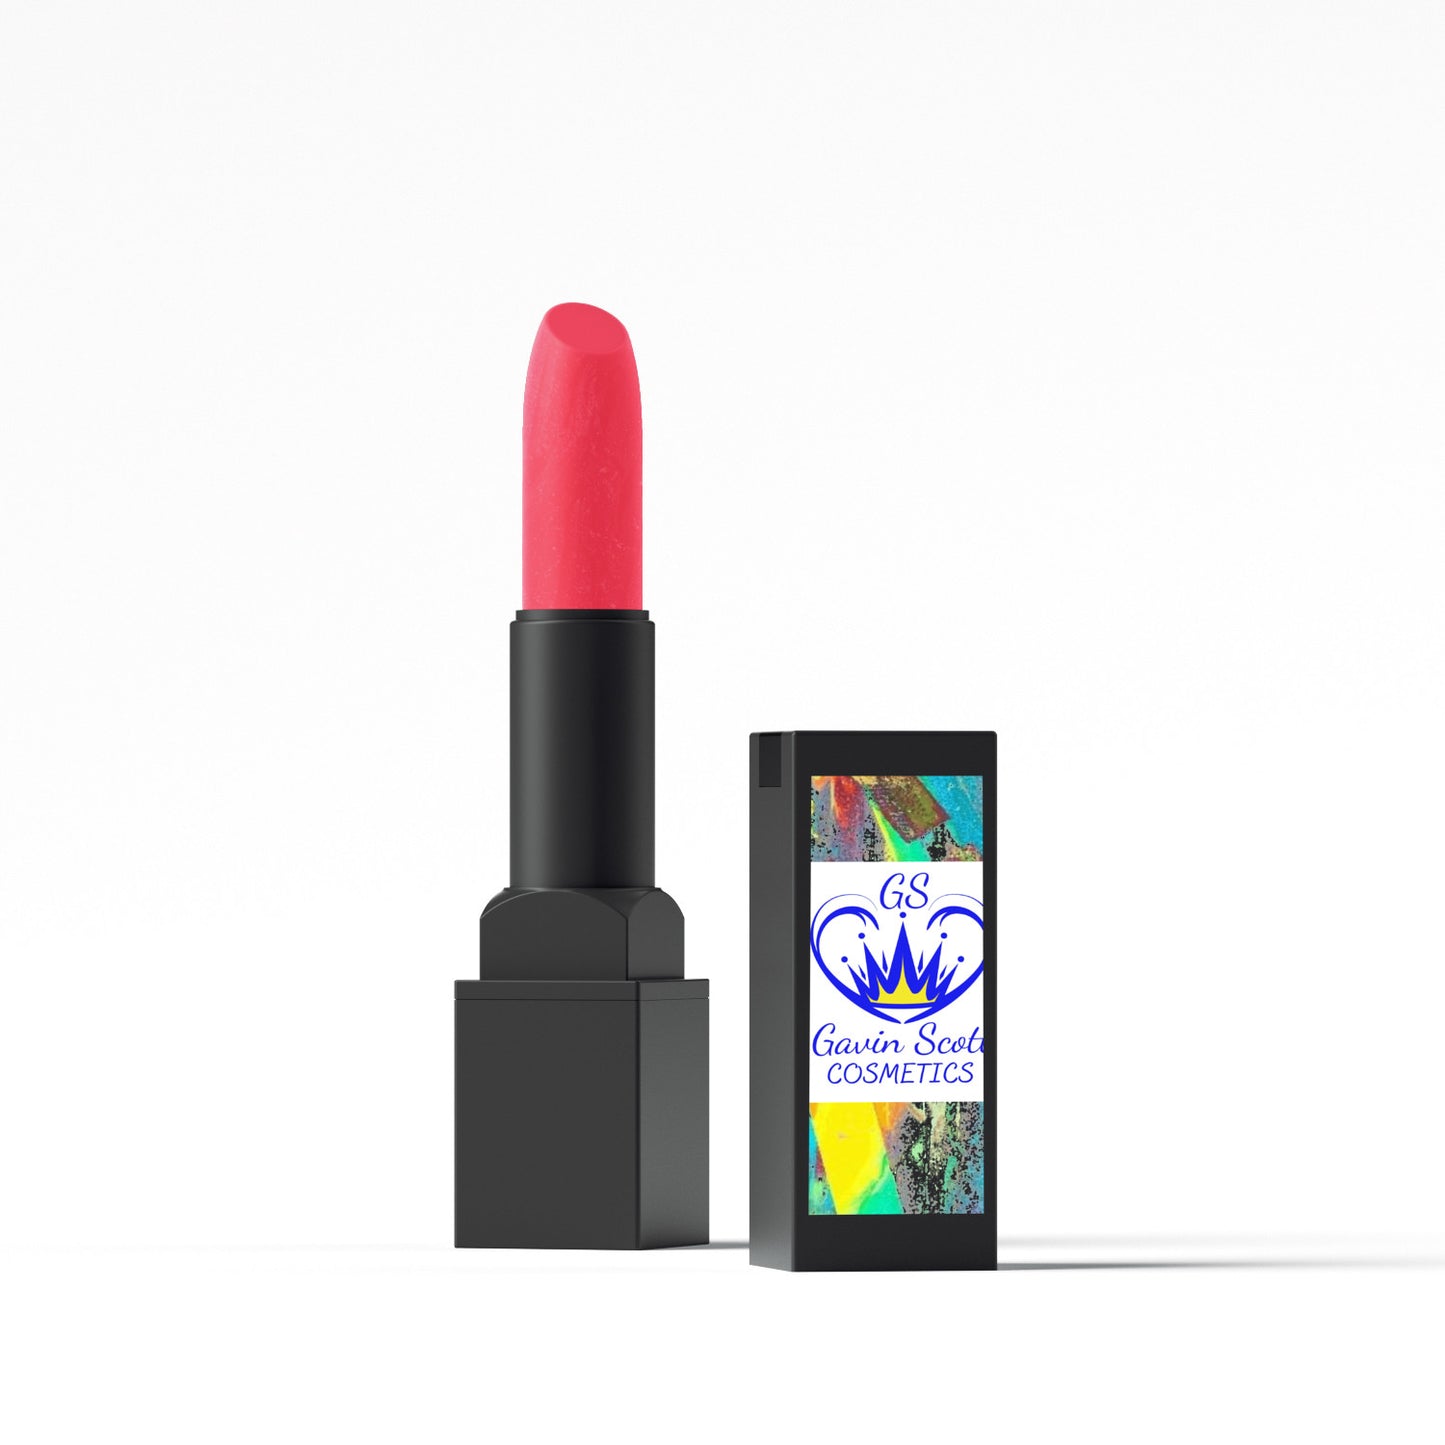 Lipstick-8062